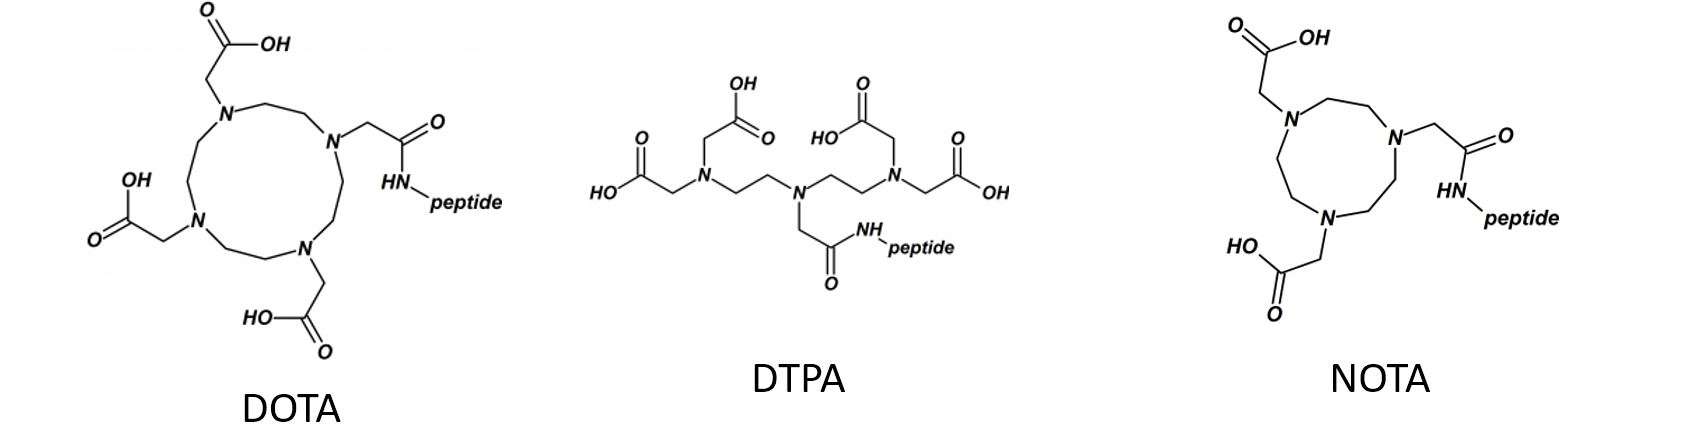 Metal Chelator peptides